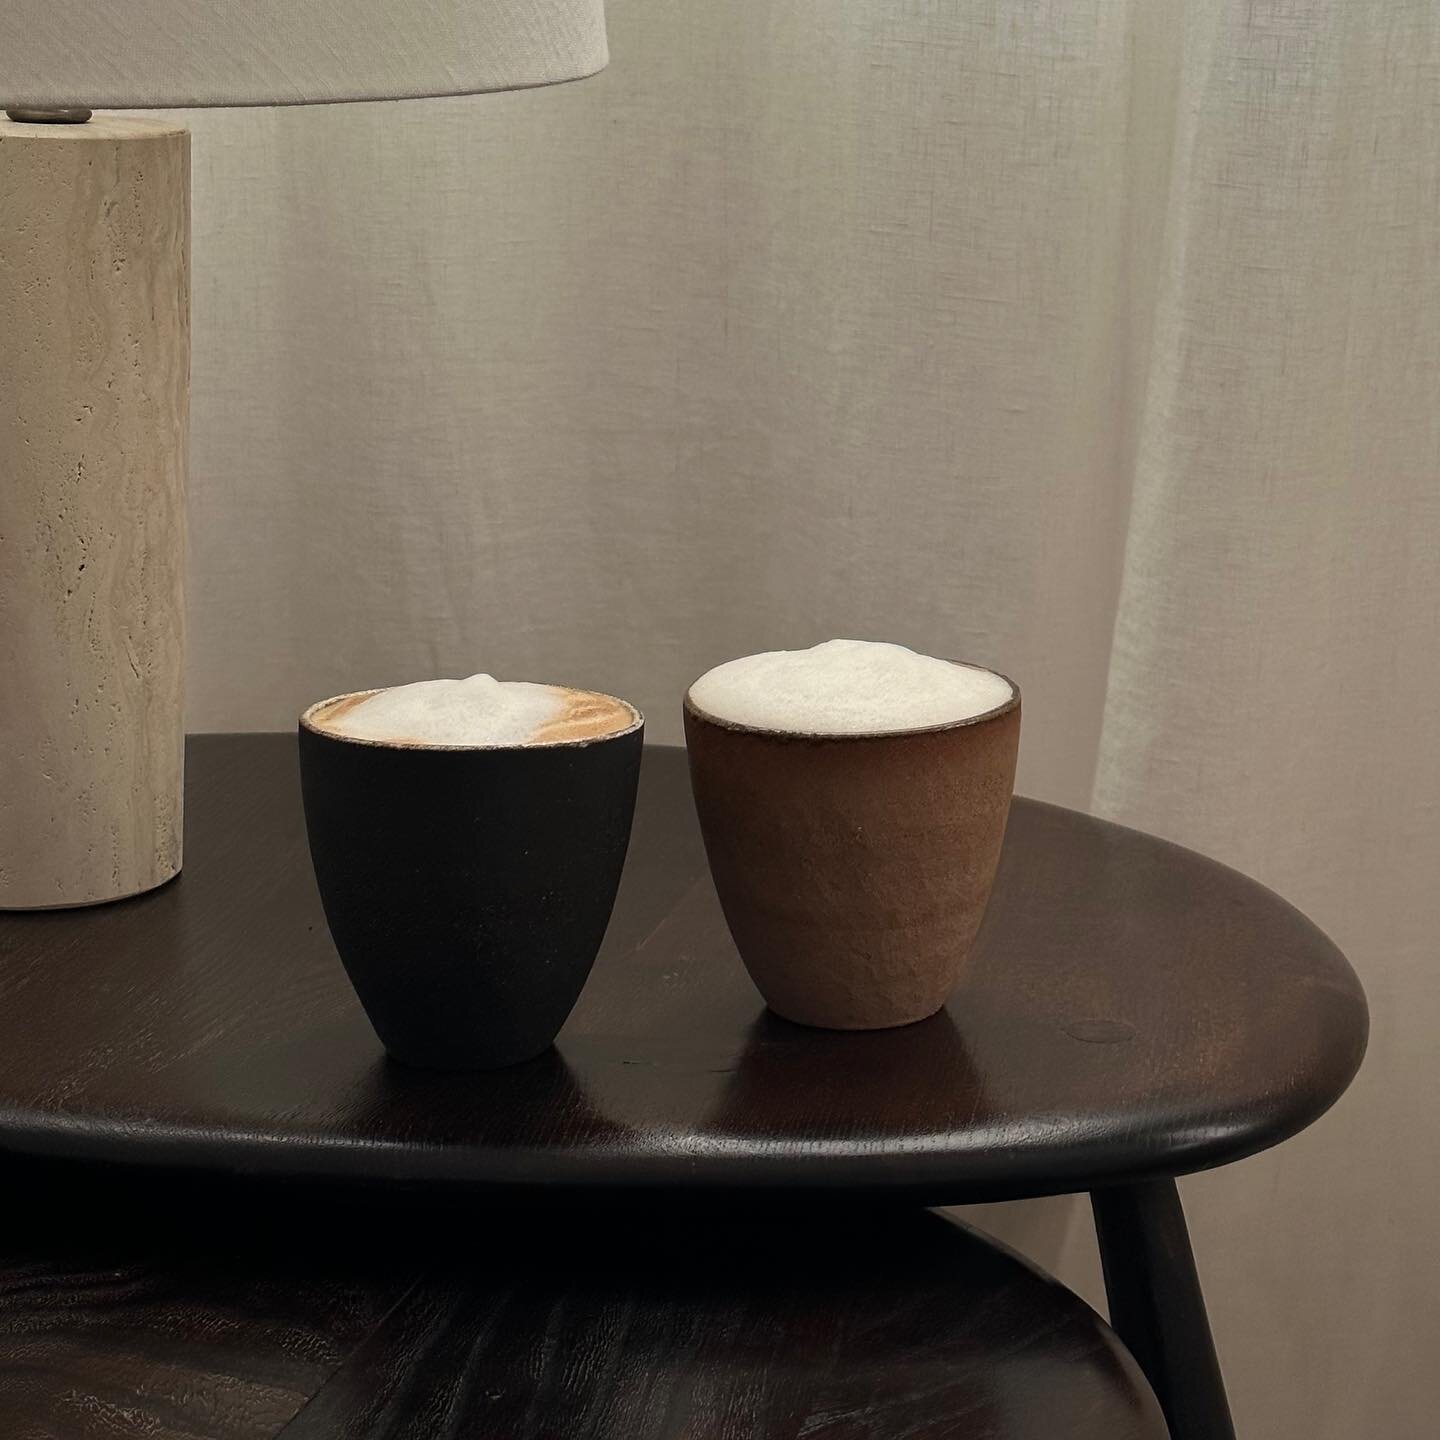 Canggu and Crystal cups.

#ceramicsmim #potterycafe #potterystudio #wheelthrown #wheelthrownpottery #coffeecup #ceramica #mediterraneanstyle #mediterraneanstylehome #homedecor #homedesign #tableware #tablesetting #tabledecoration #tabledesign #cerami